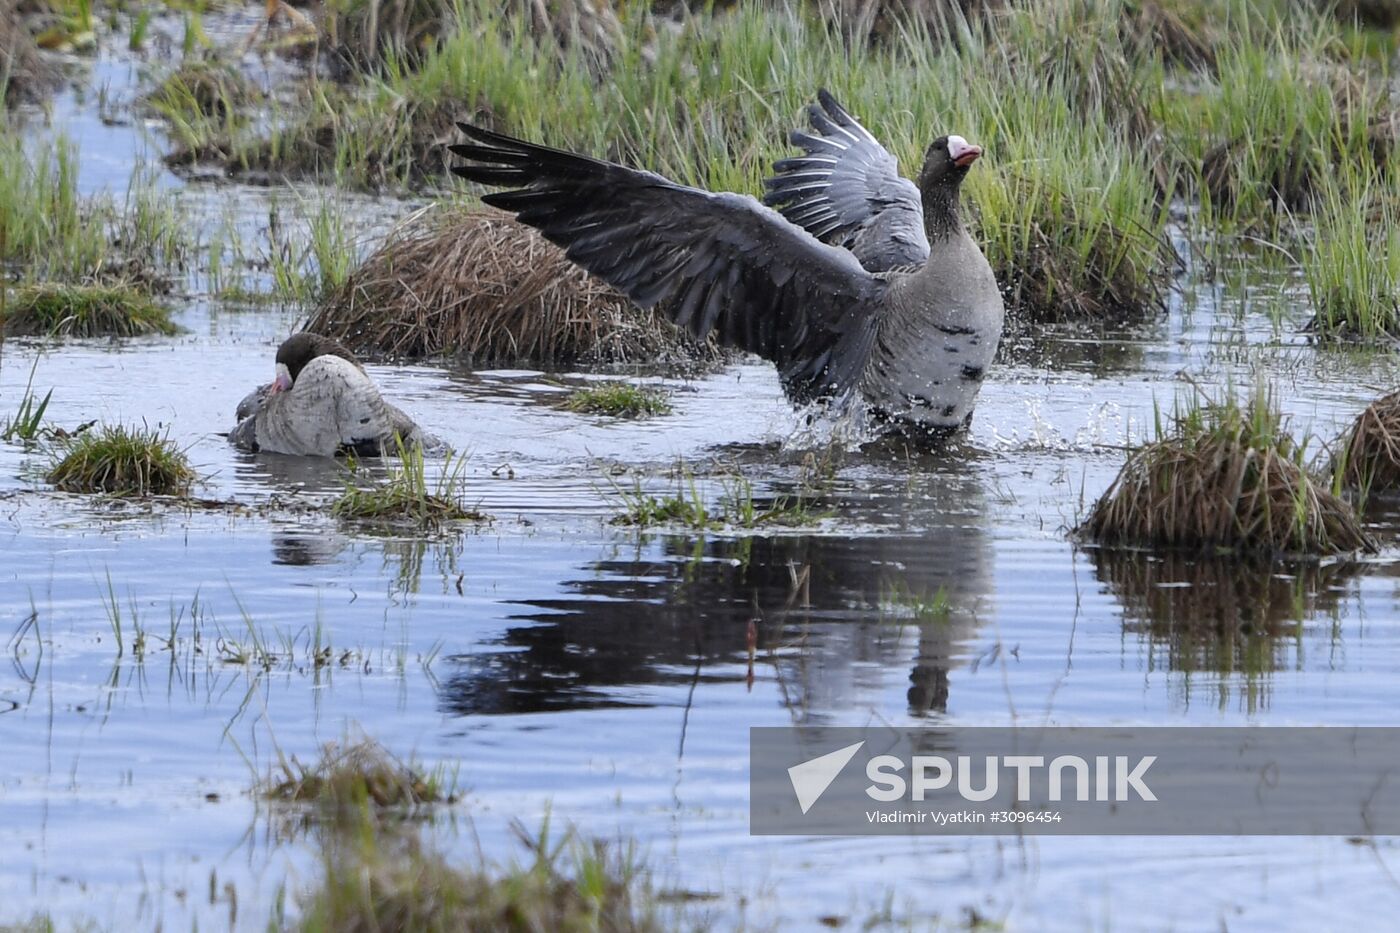 Goose reserve in the Kostroma Region